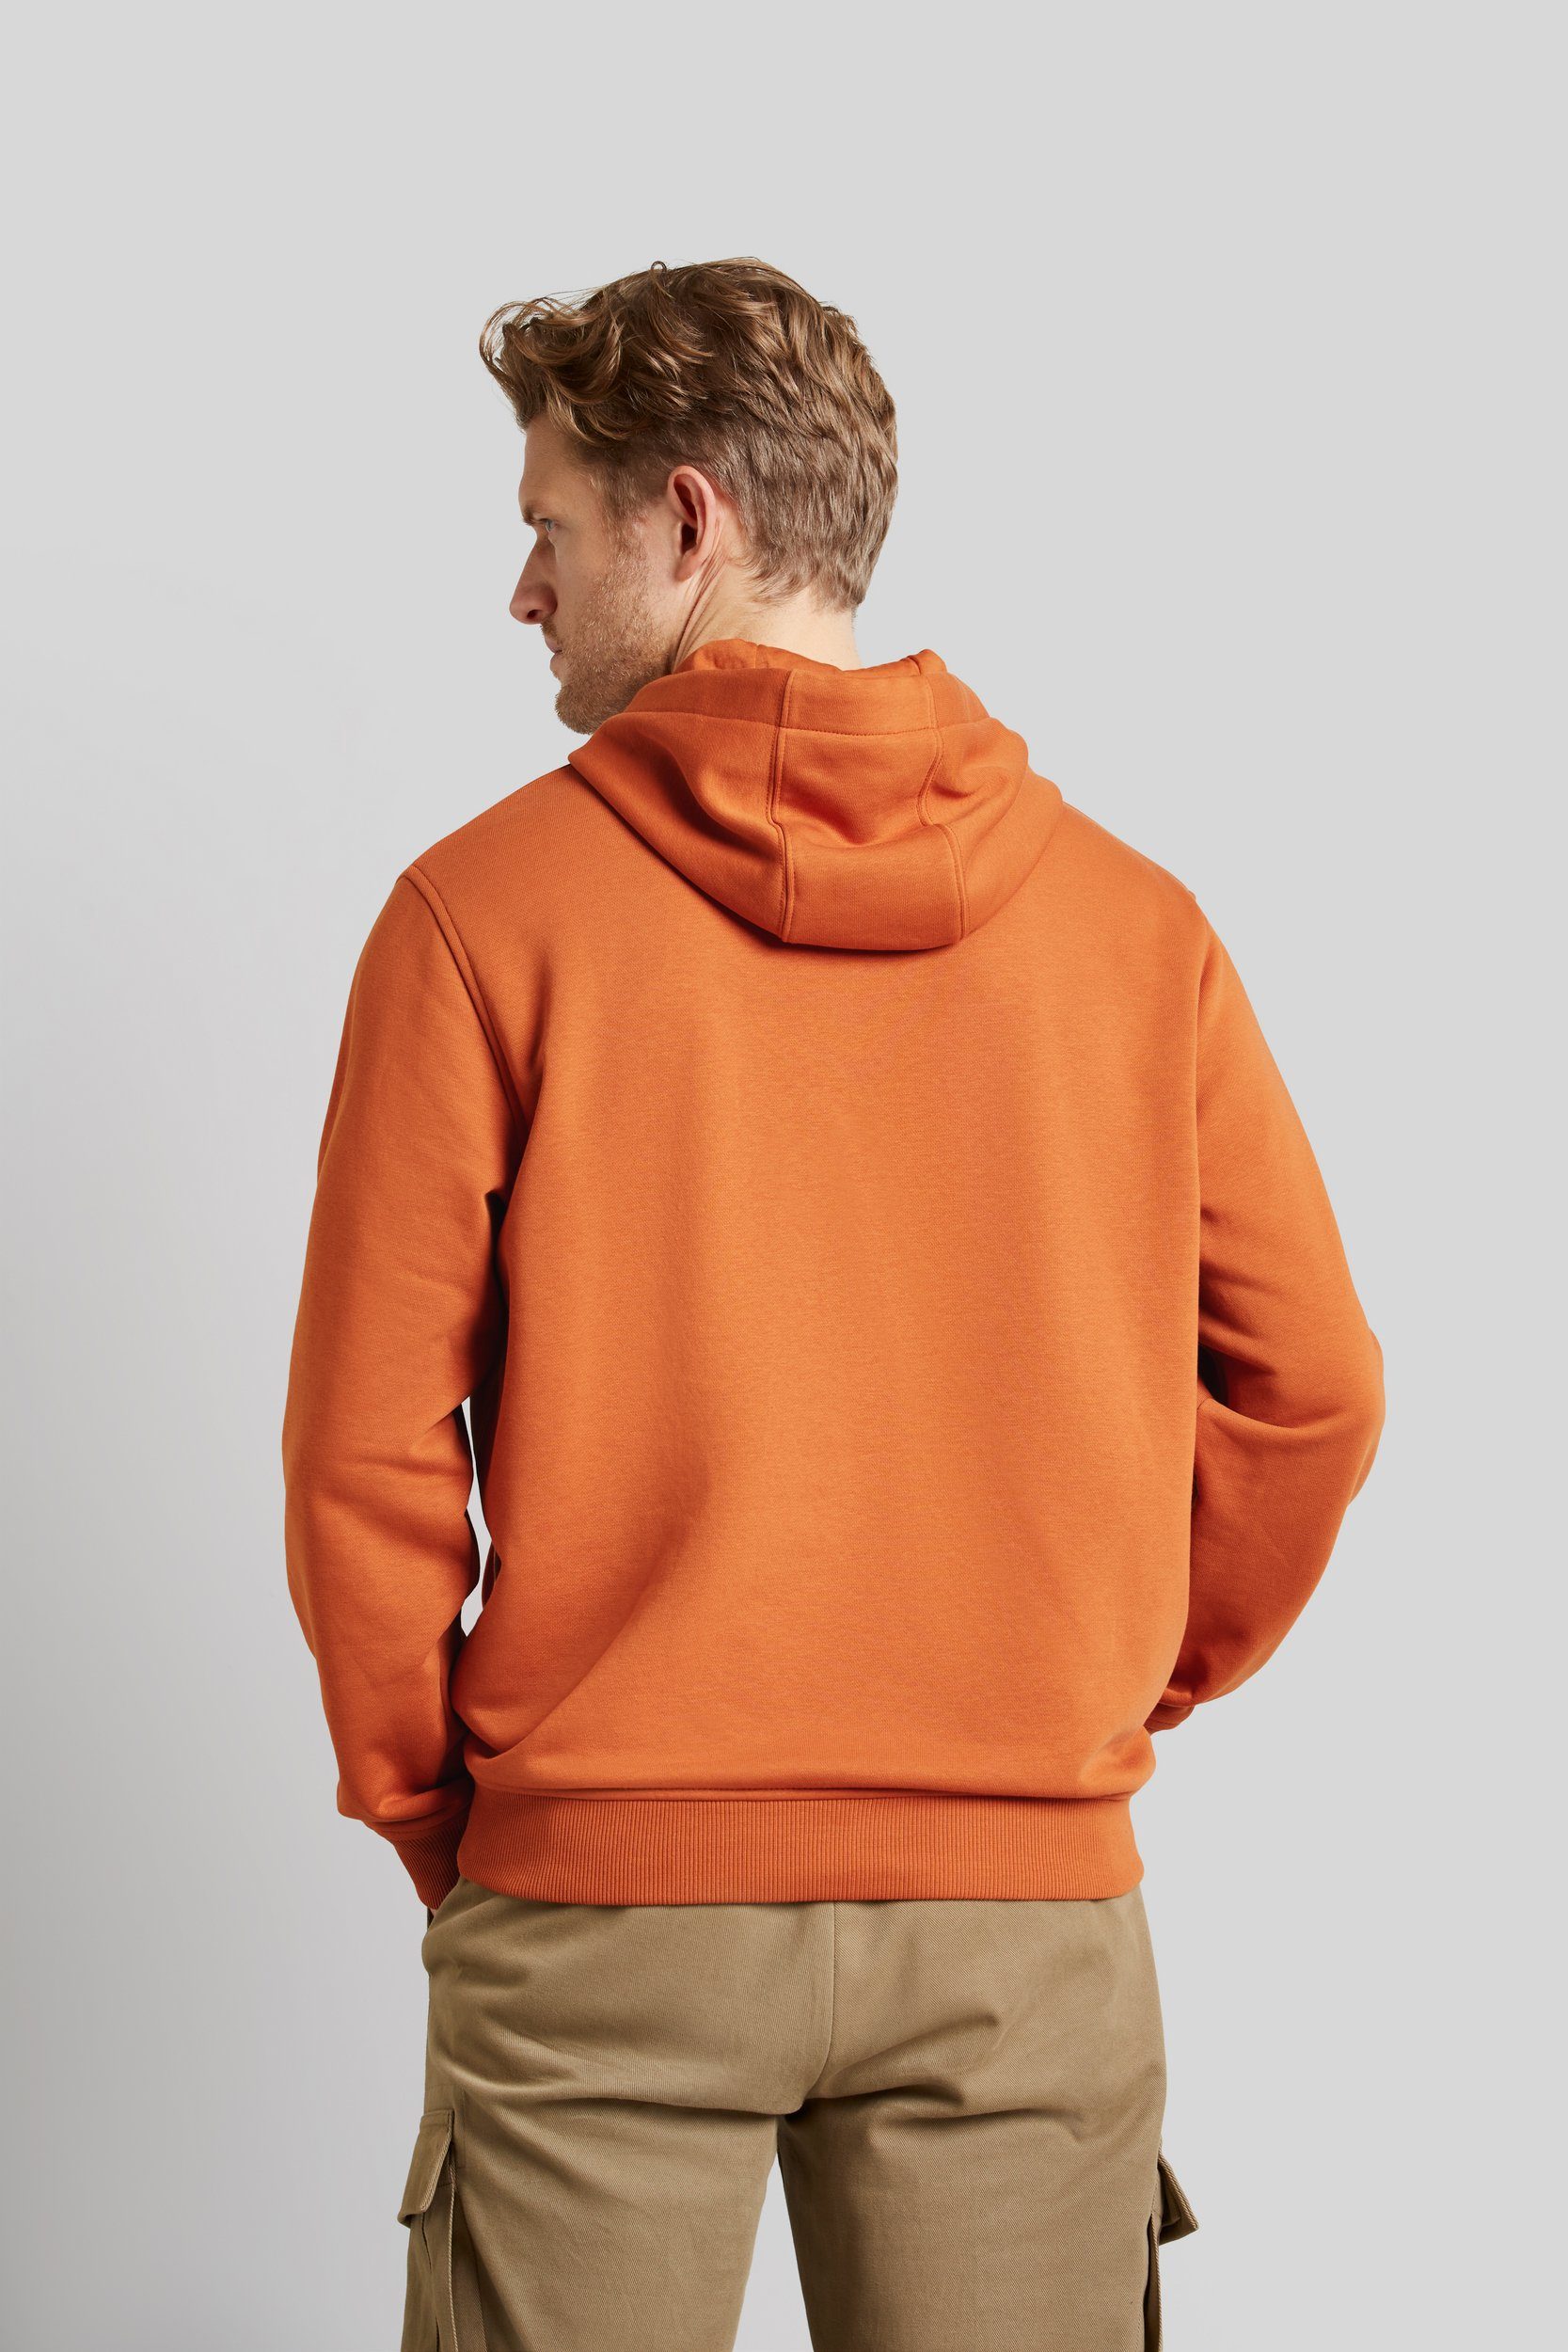 orange Logo-Print mit bugatti Sweatshirt